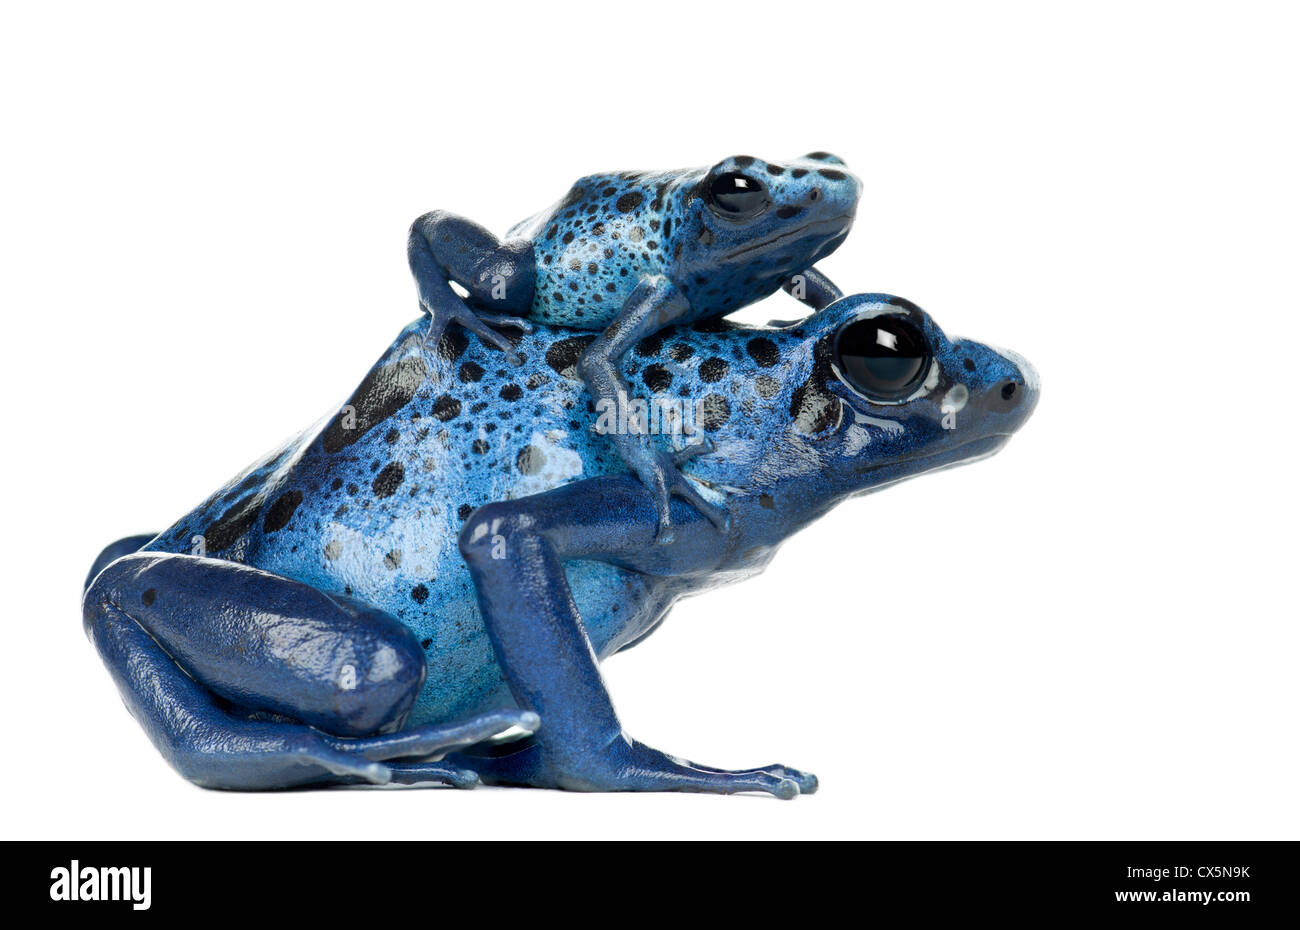 Female Blue Poison Dart Frog with young, Dendrobates azureus, portrait against white background Stock Photo